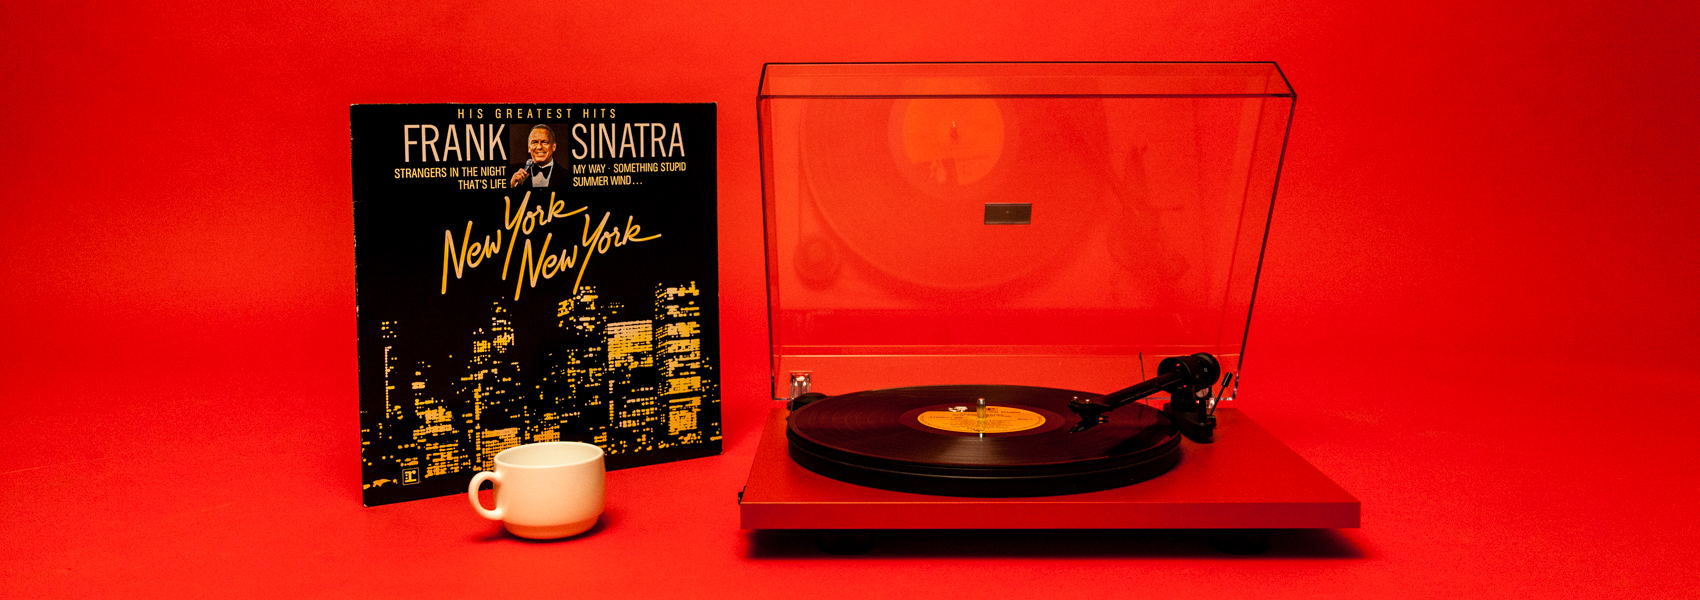 Sinatra Red